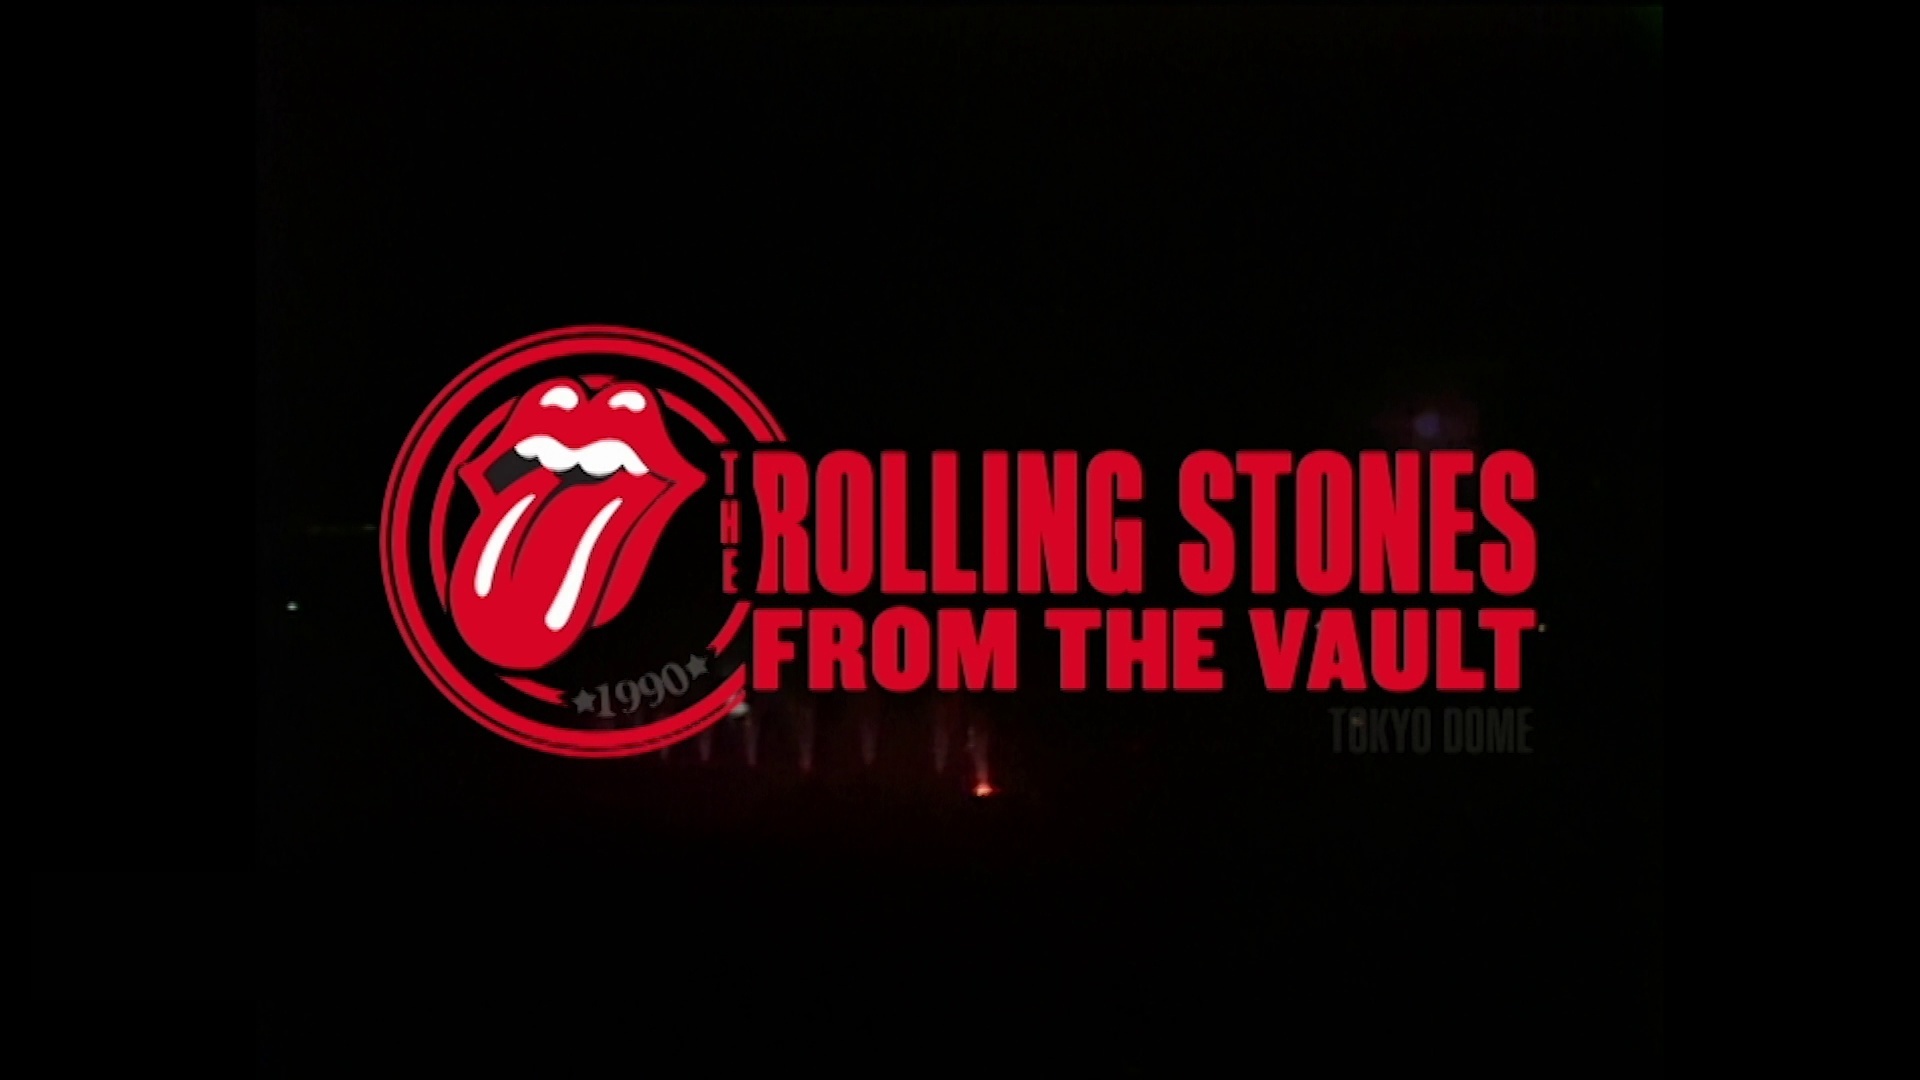 The Rolling Stones Computer Wallpapers Desktop Backgrounds